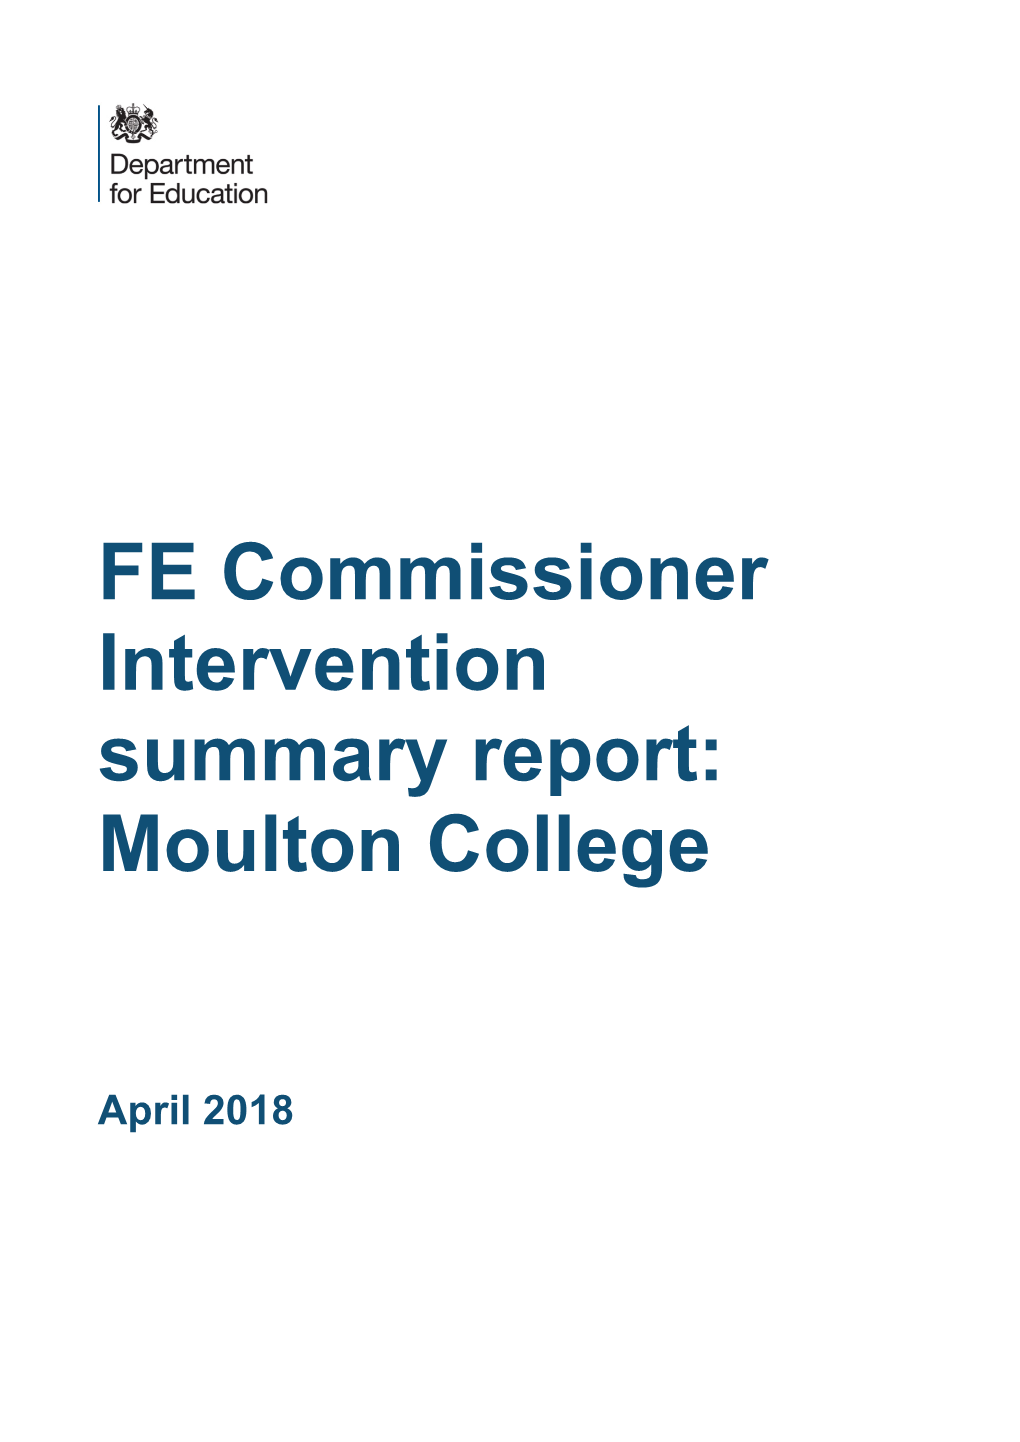 FE Commissioner Intervention Summary Report: Moulton College